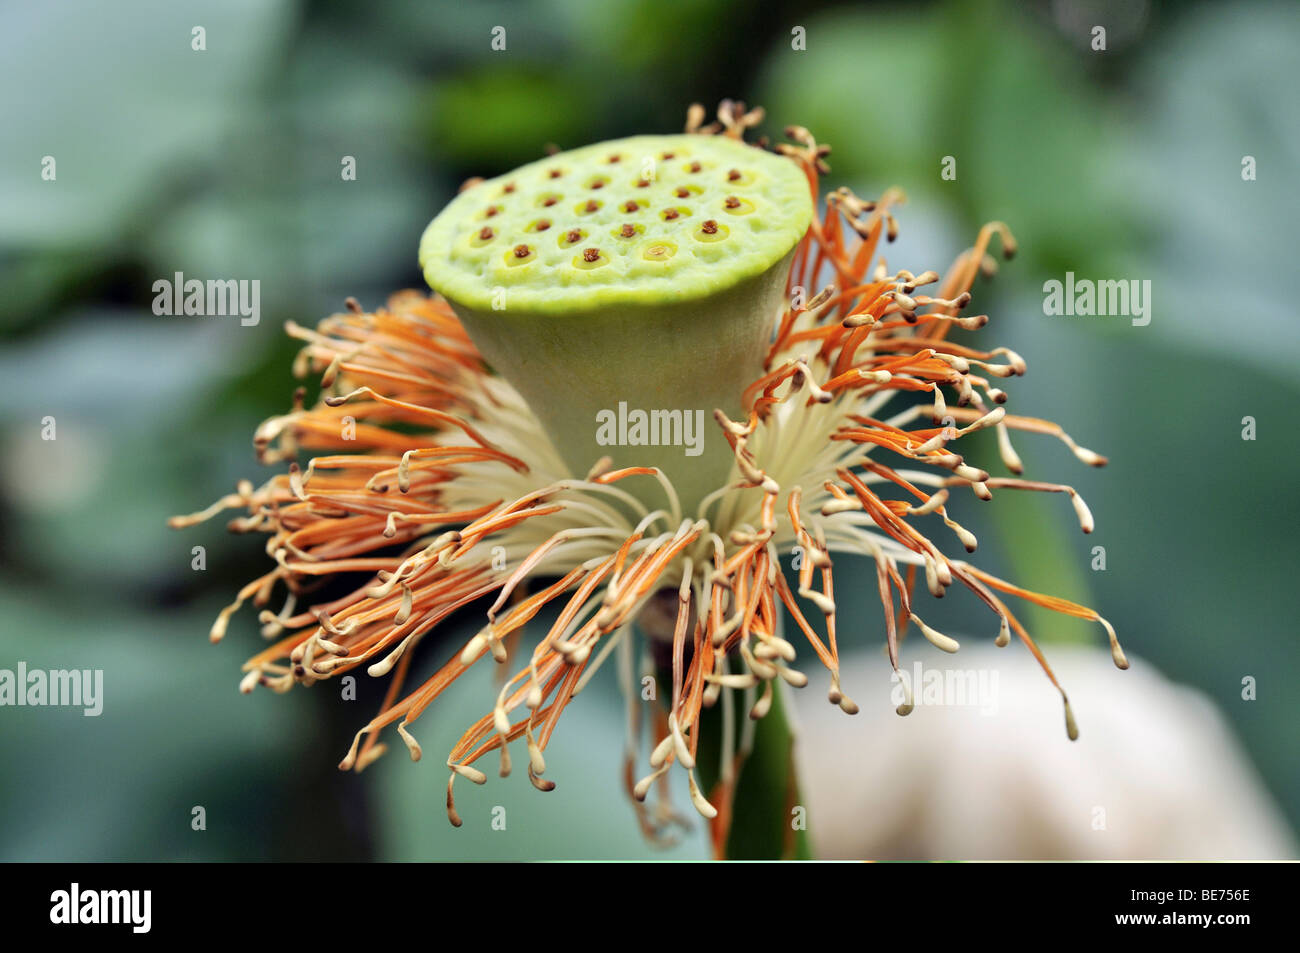 Lotus Flower (Nelumbo nucifera) seeds capsule Stock Photo